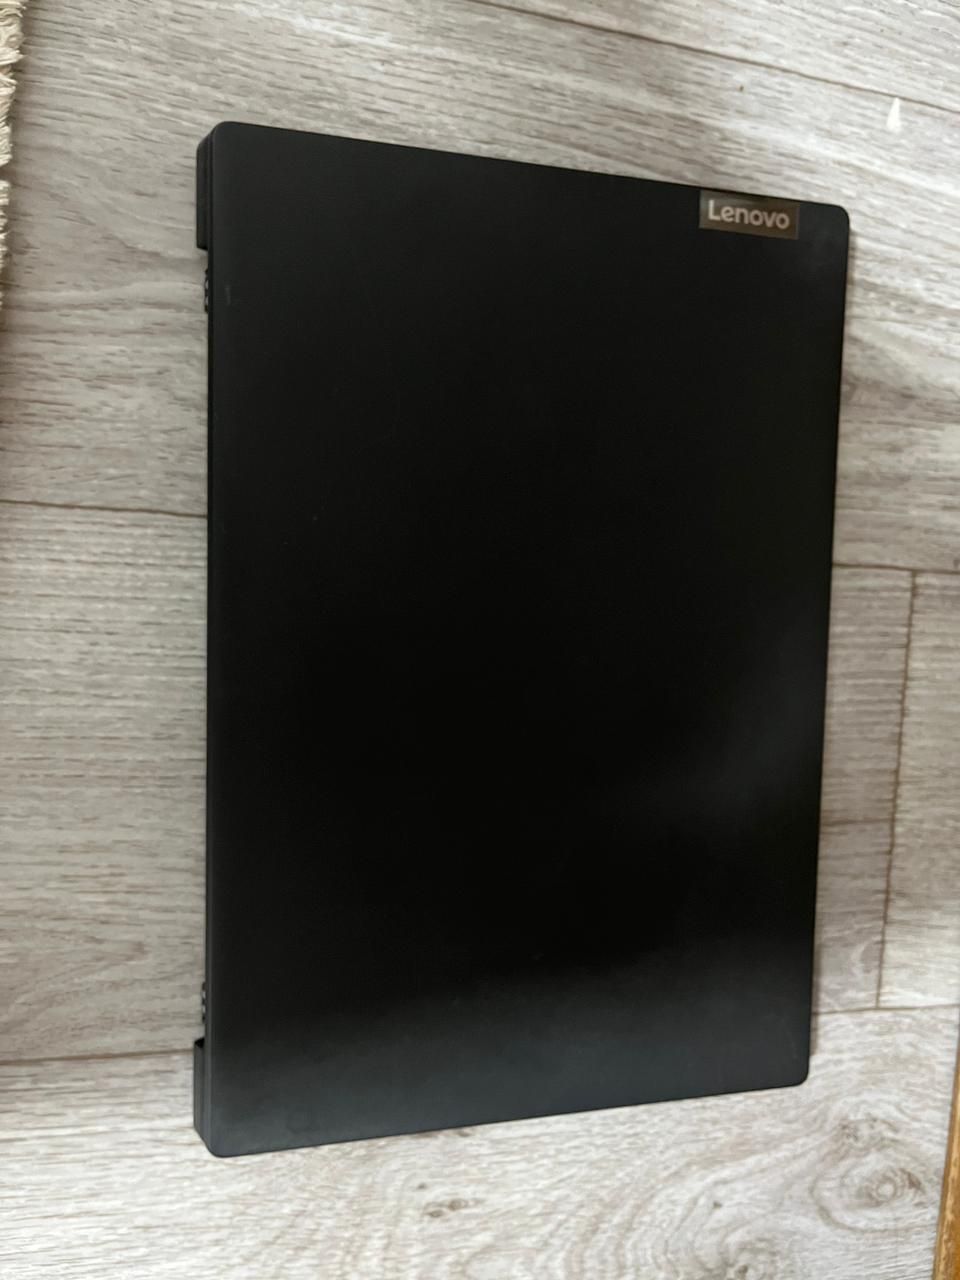 Продам ноутбук Lenova ideapad s145